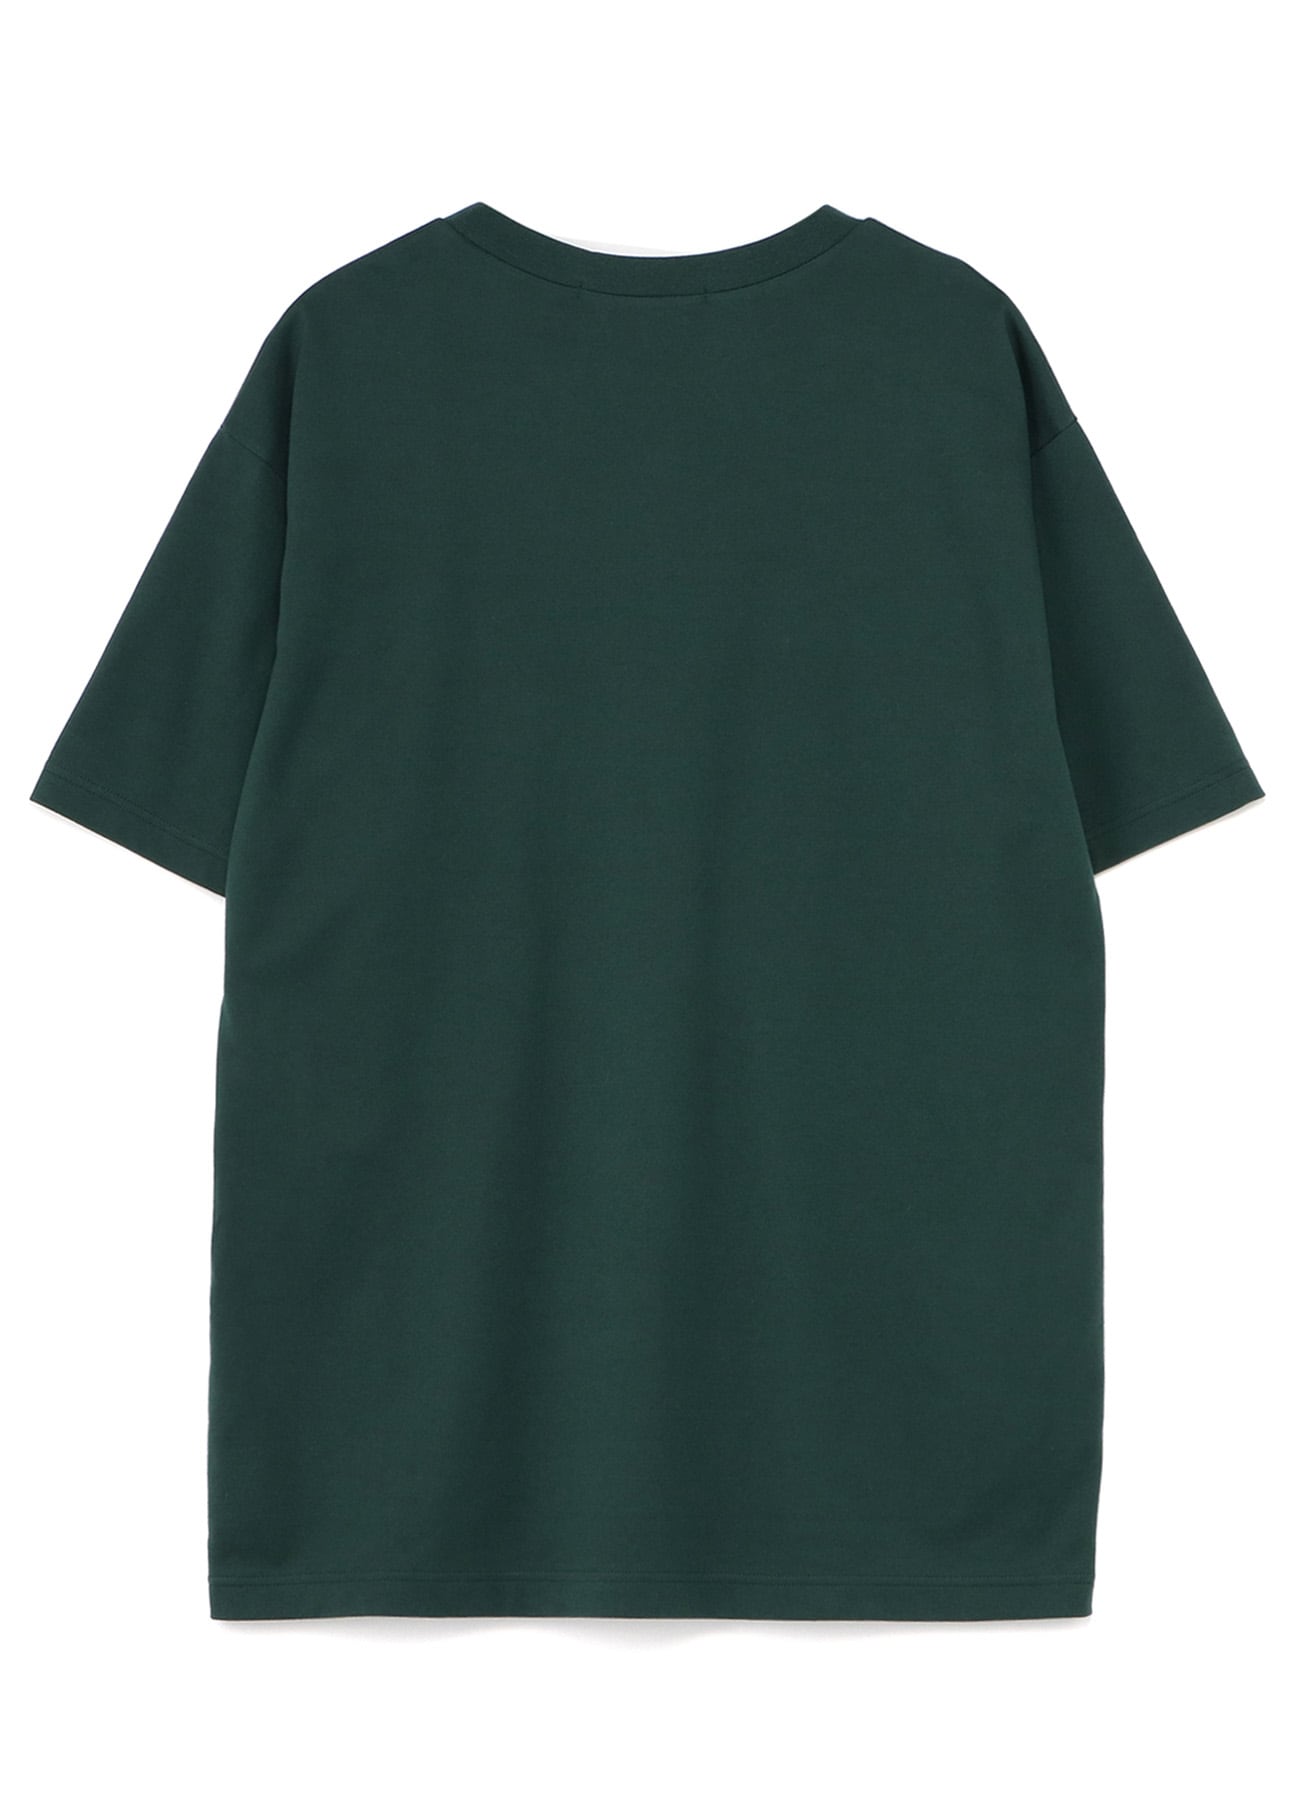 Clock Print Oversized T-Shirt(S Green): Vintage 1.1｜THE SHOP 